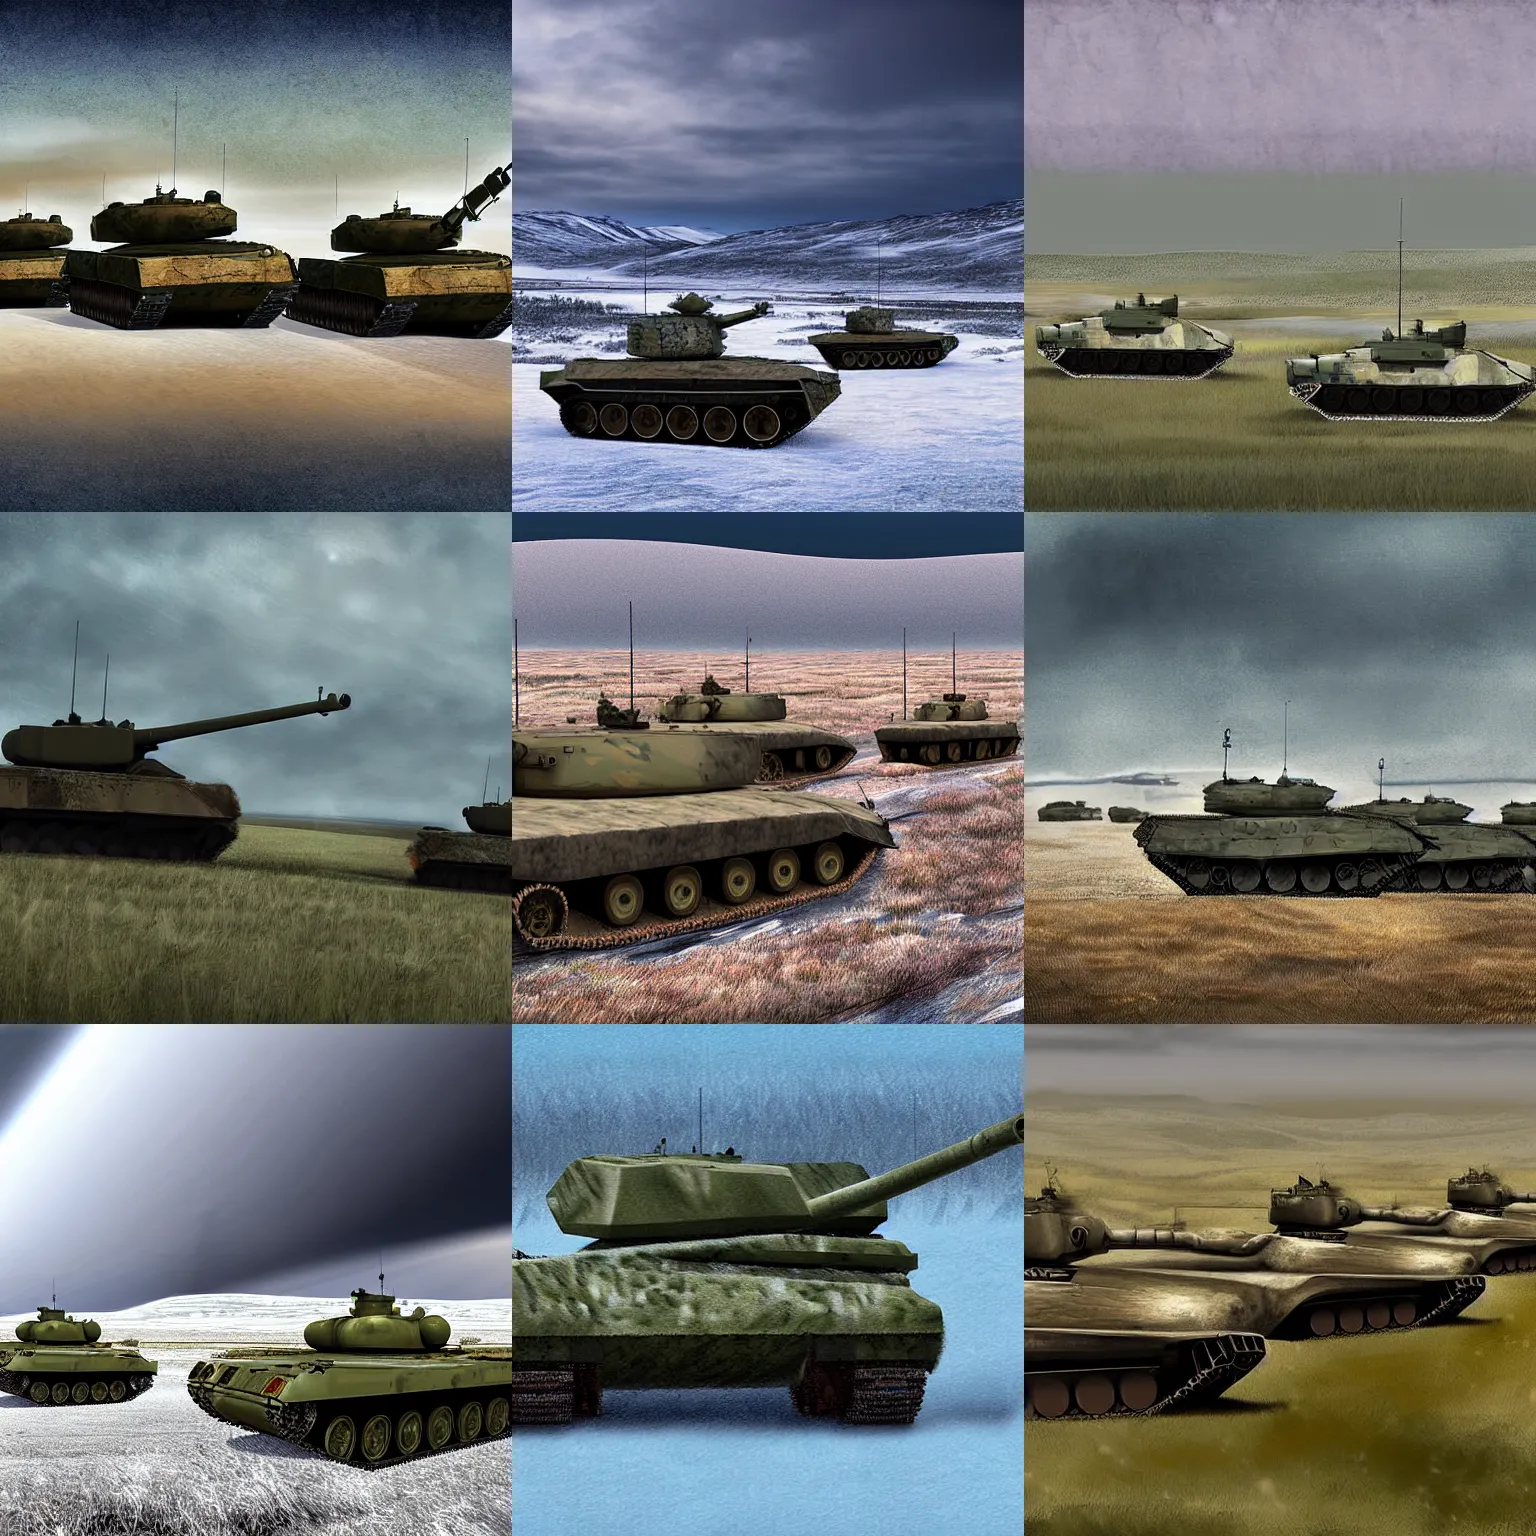 Prompt: digital art of army tanks roaming across a tundra